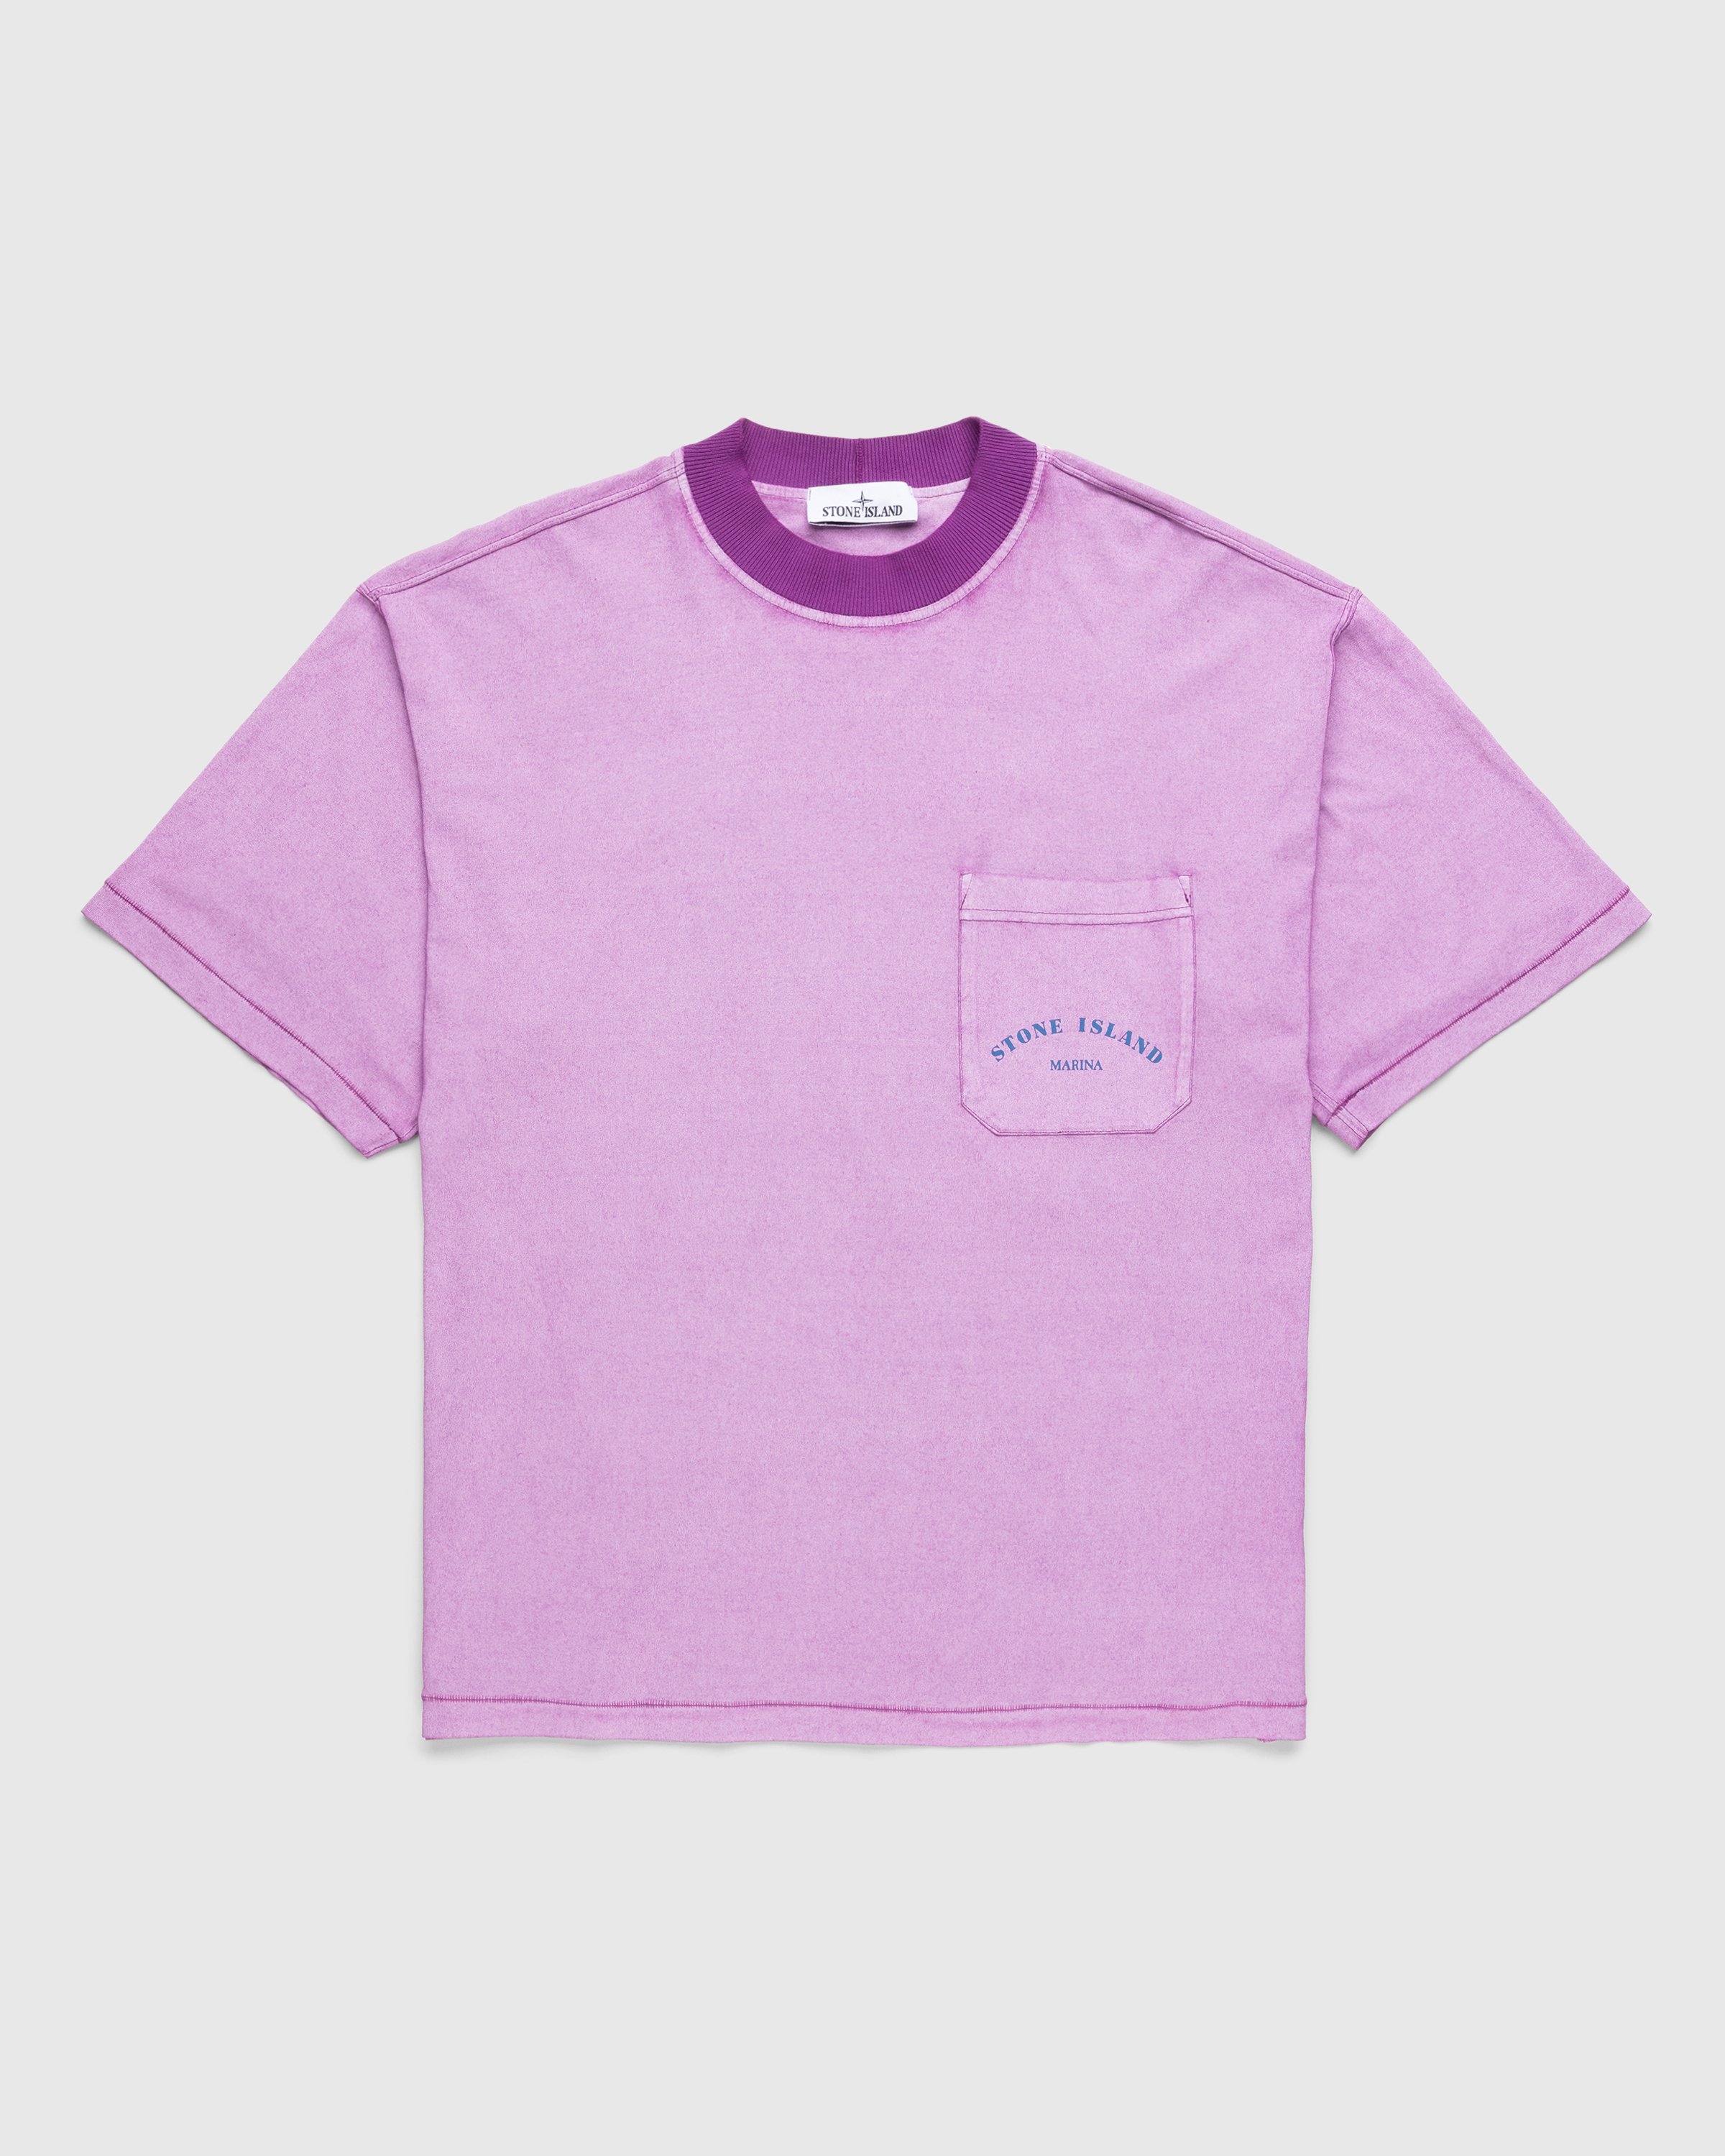 Stone Island - T-Shirt Pink 216X4 - Clothing - Pink - Image 1